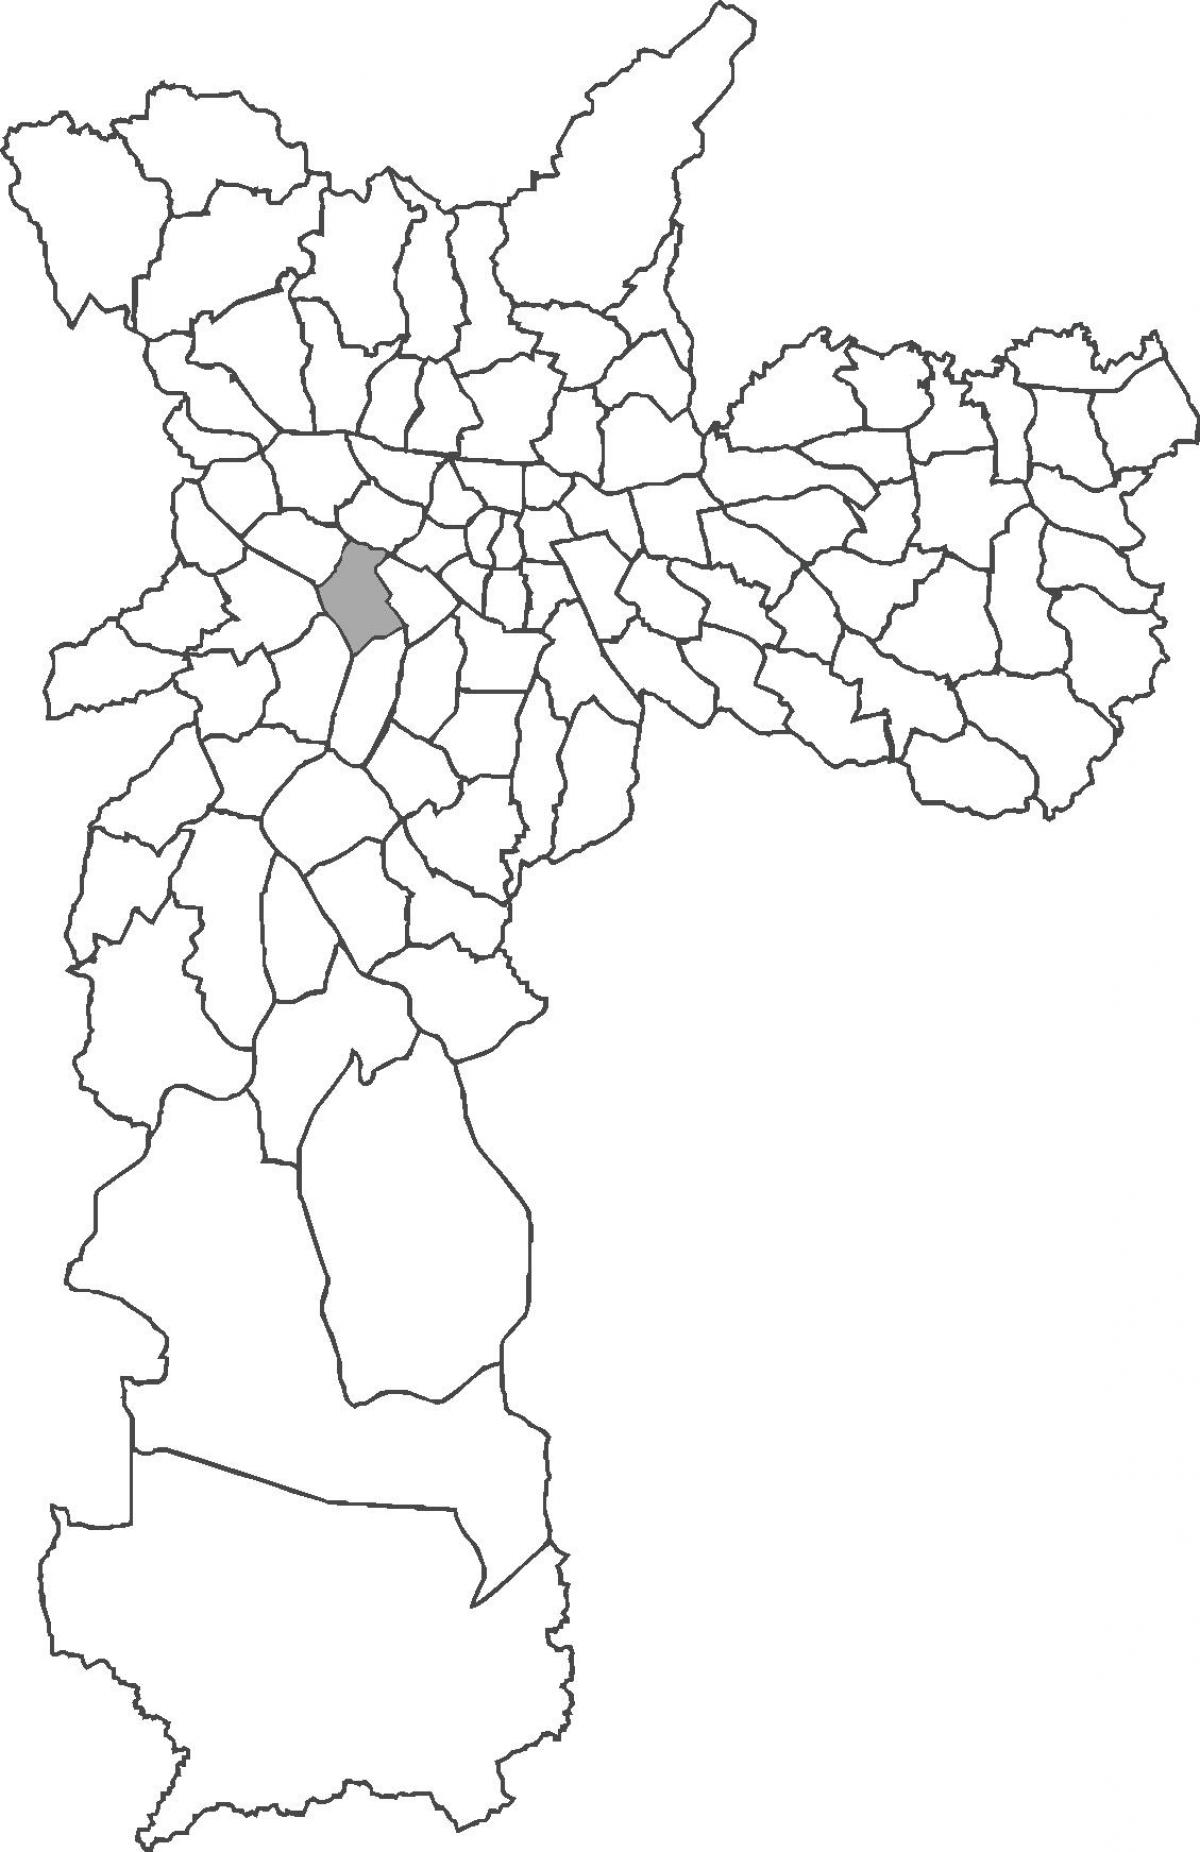 Мапа области Пинхейрос